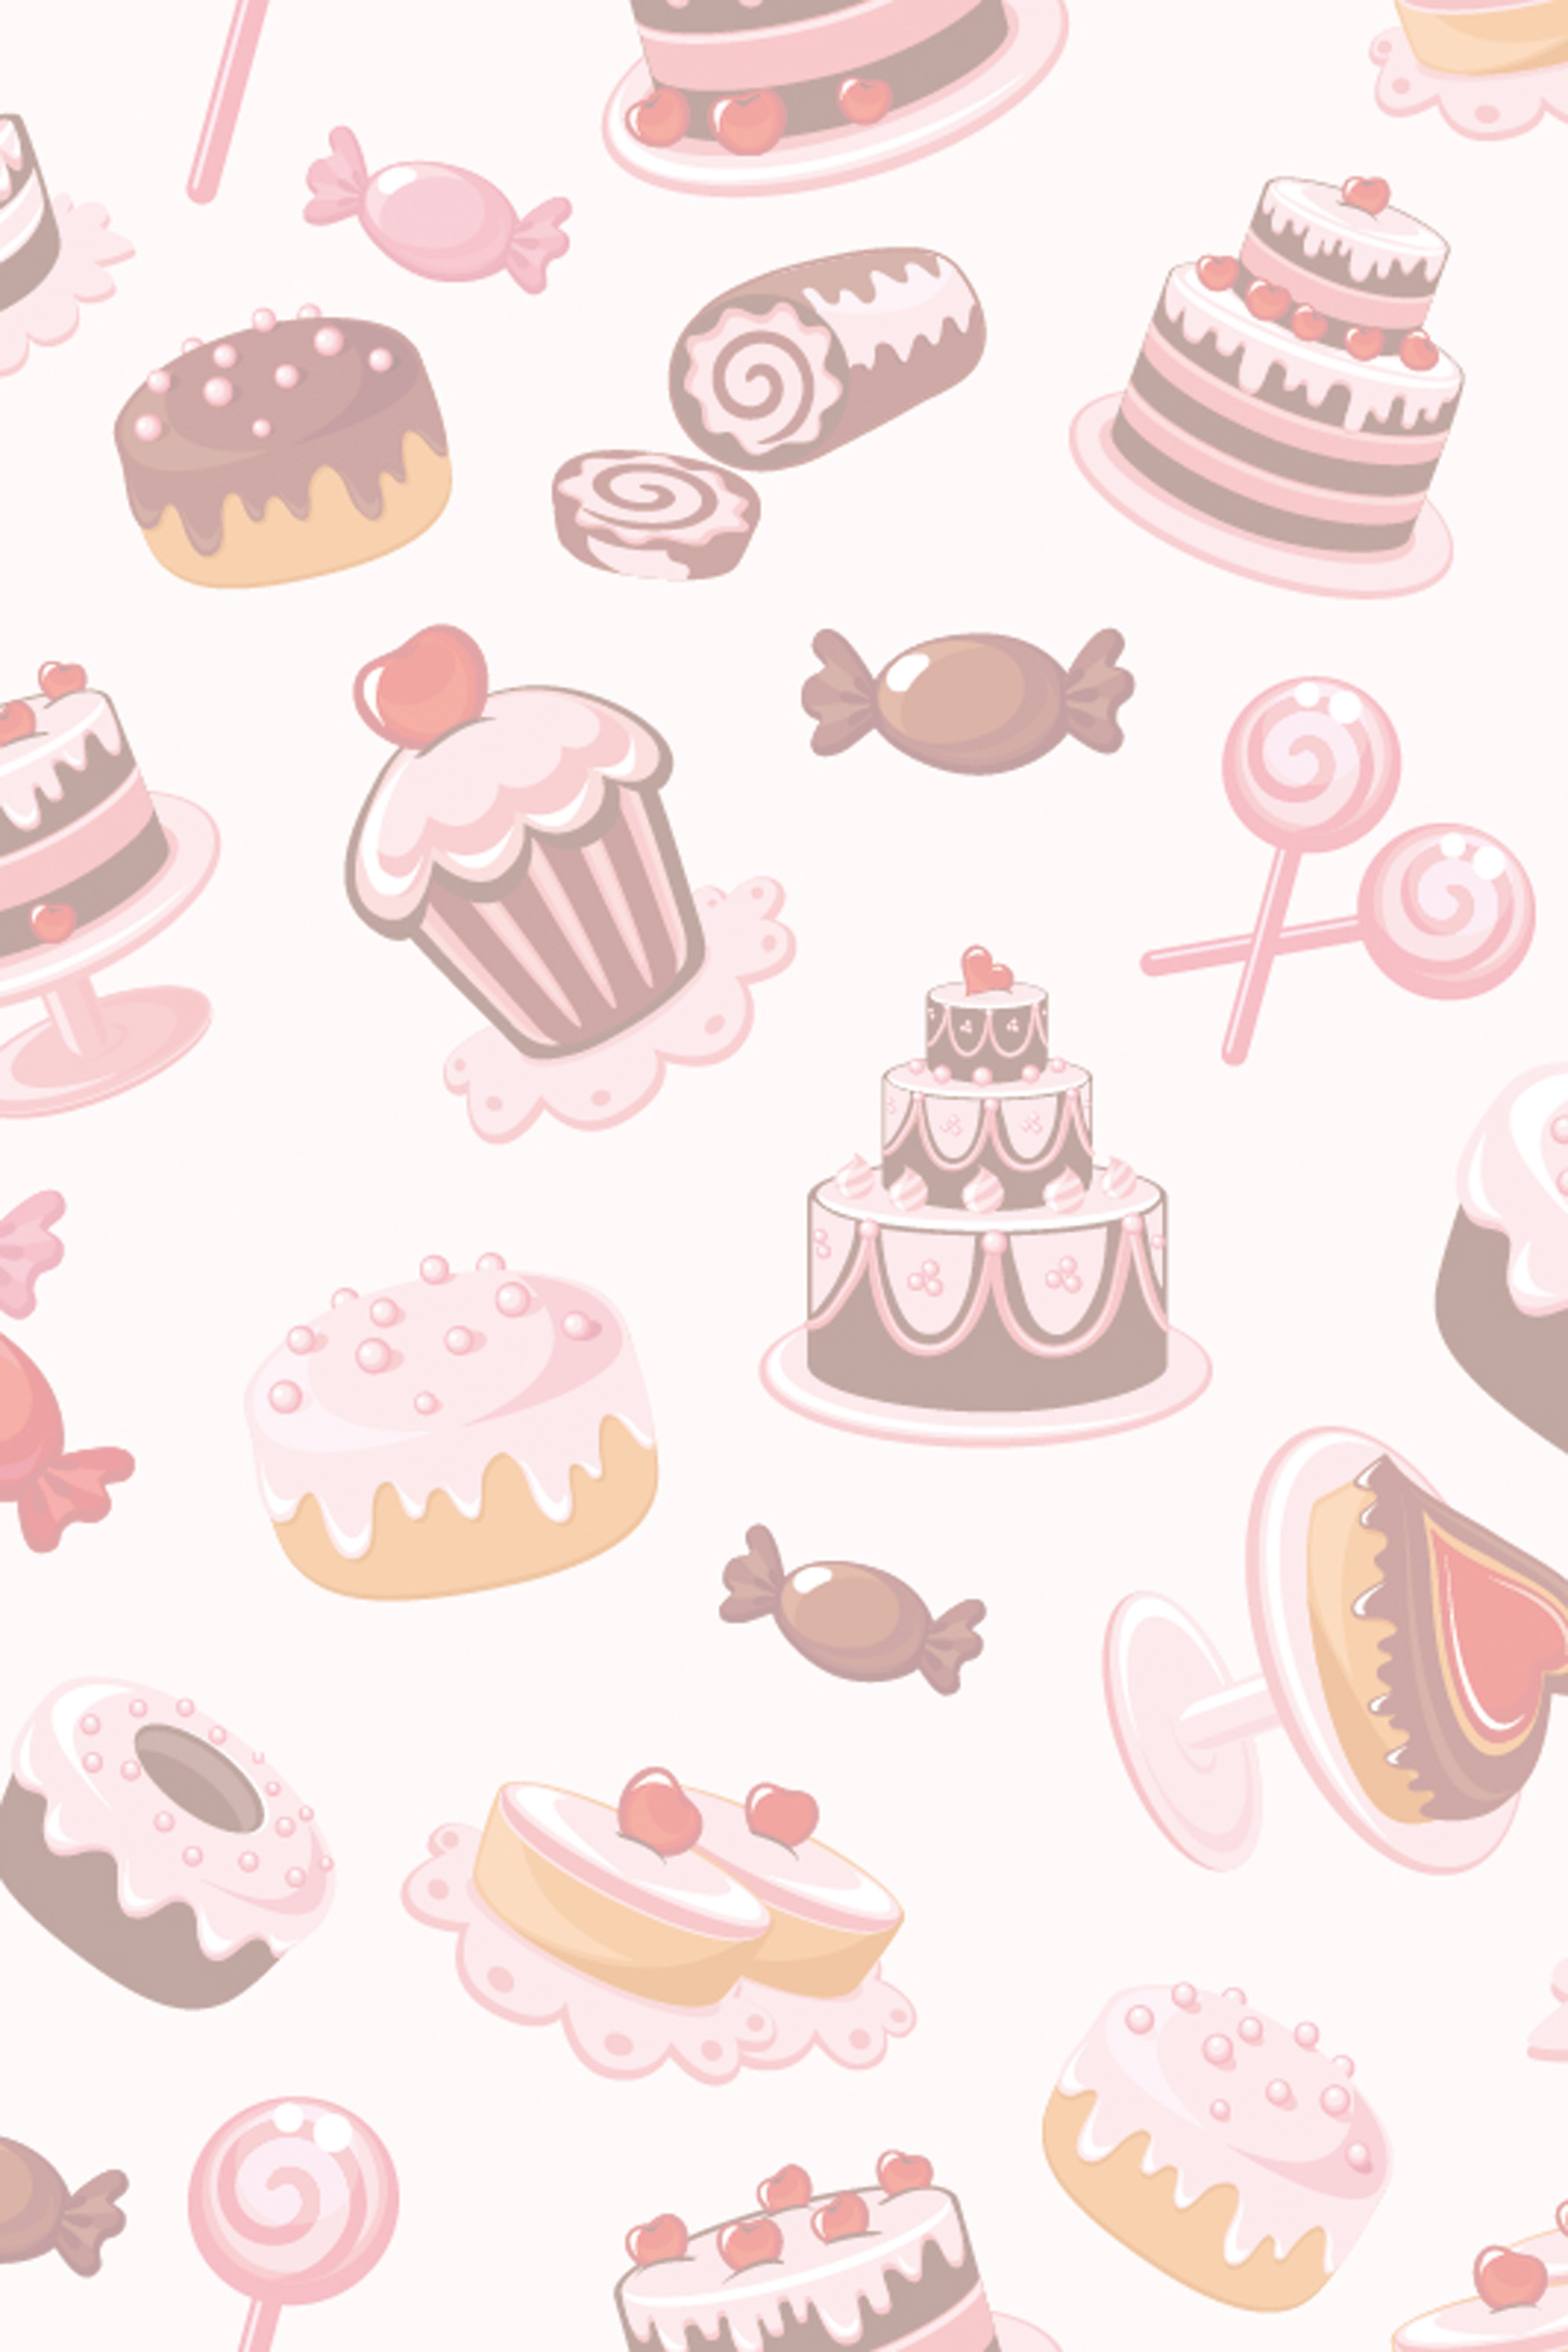 Dessert Background. Cupcakes wallpaper, Baking wallpaper, Cake wallpaper